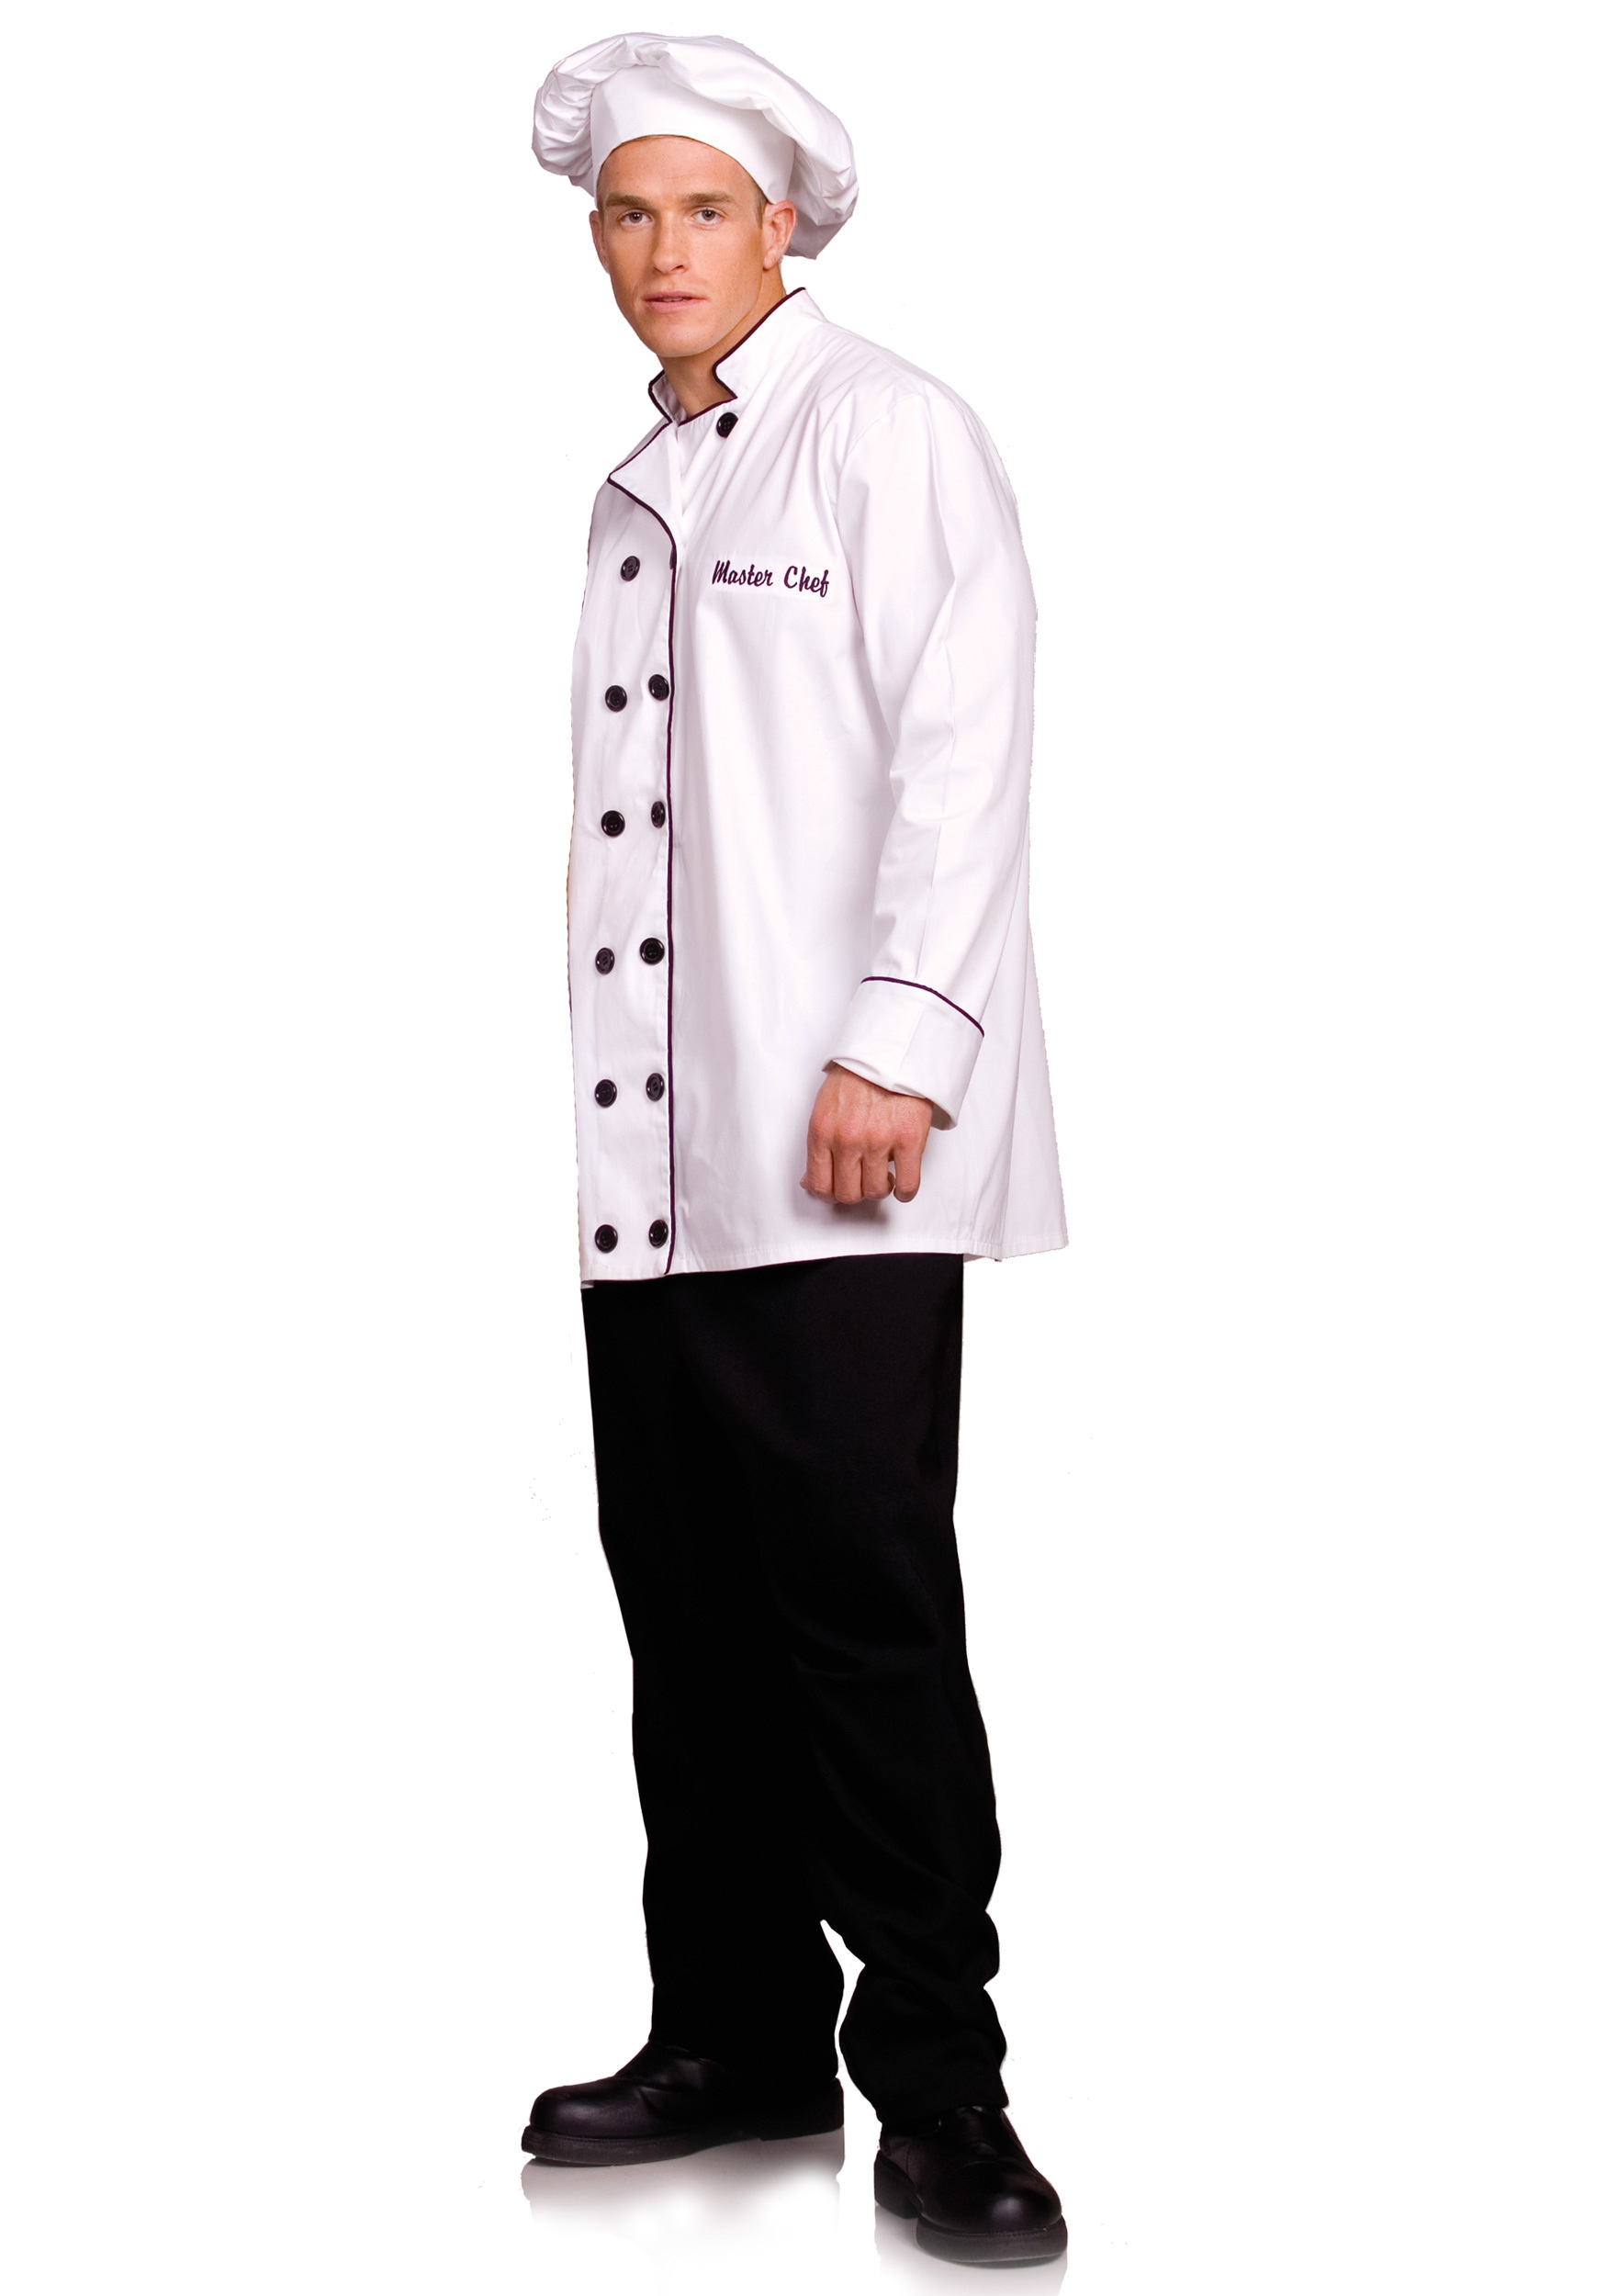 Plus Size Chef Fancy Dress Costume 2X